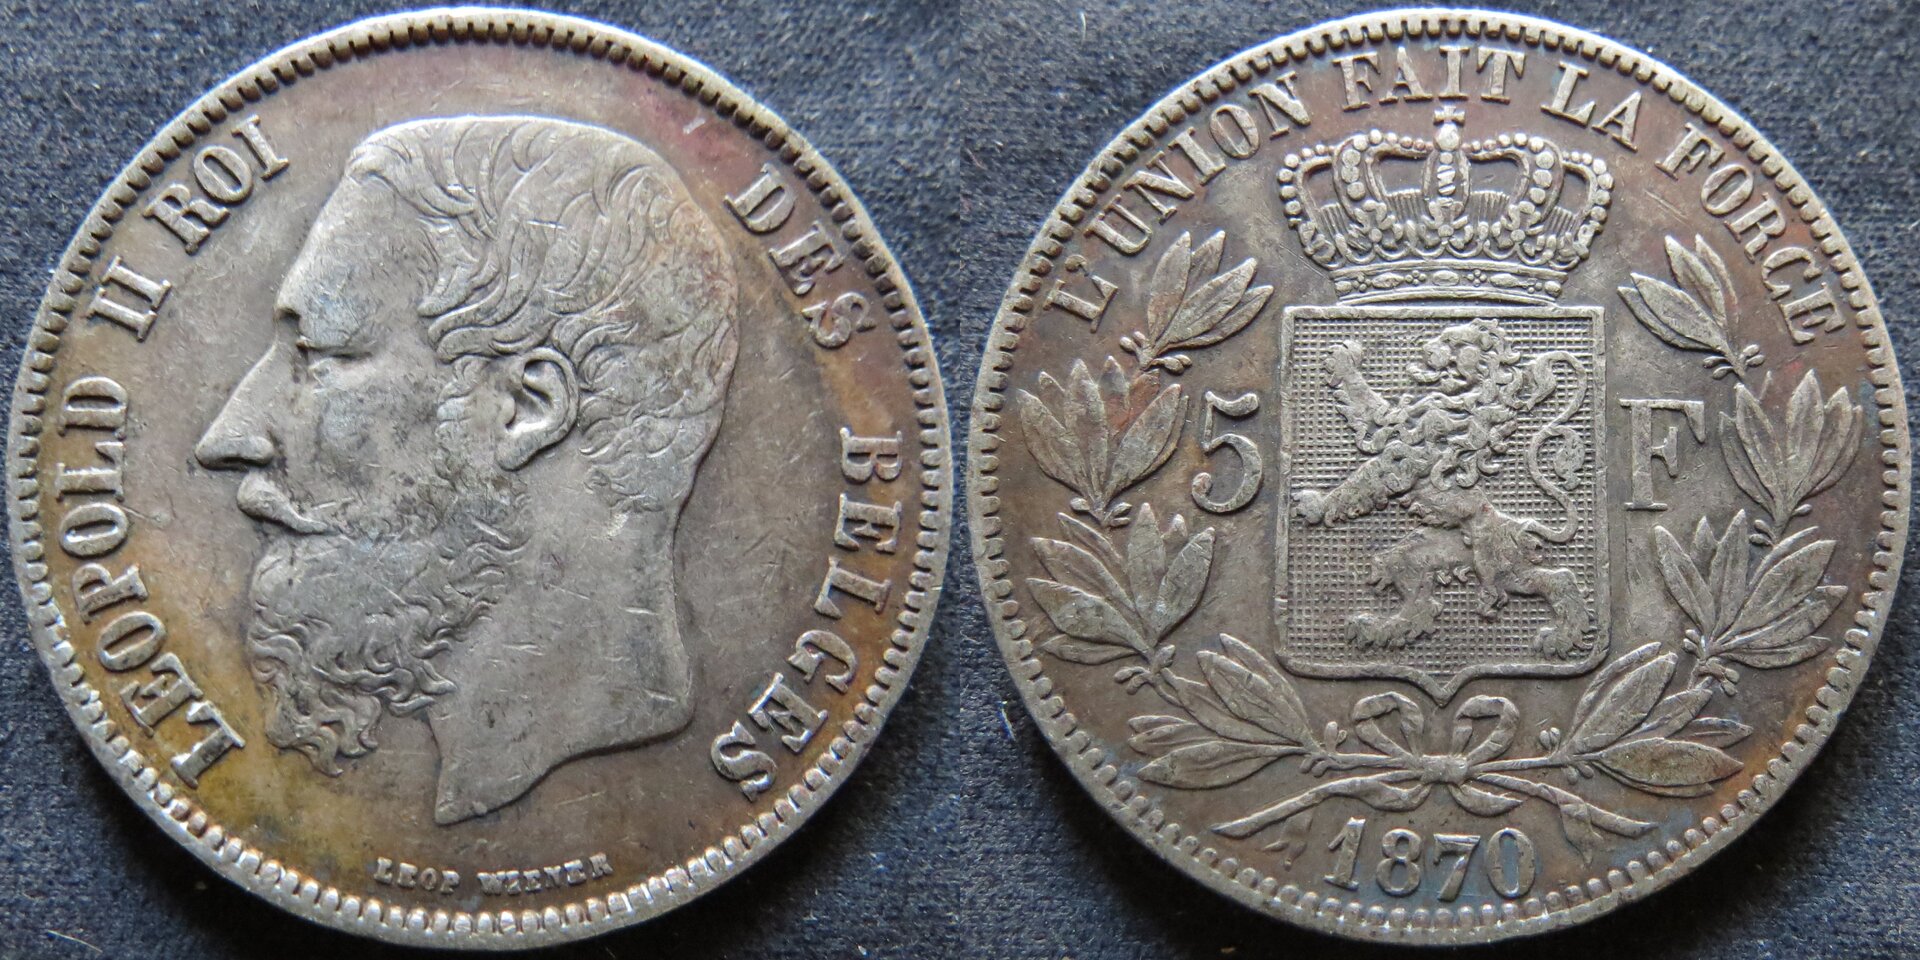 Belgium 5 Francs 1870.jpg